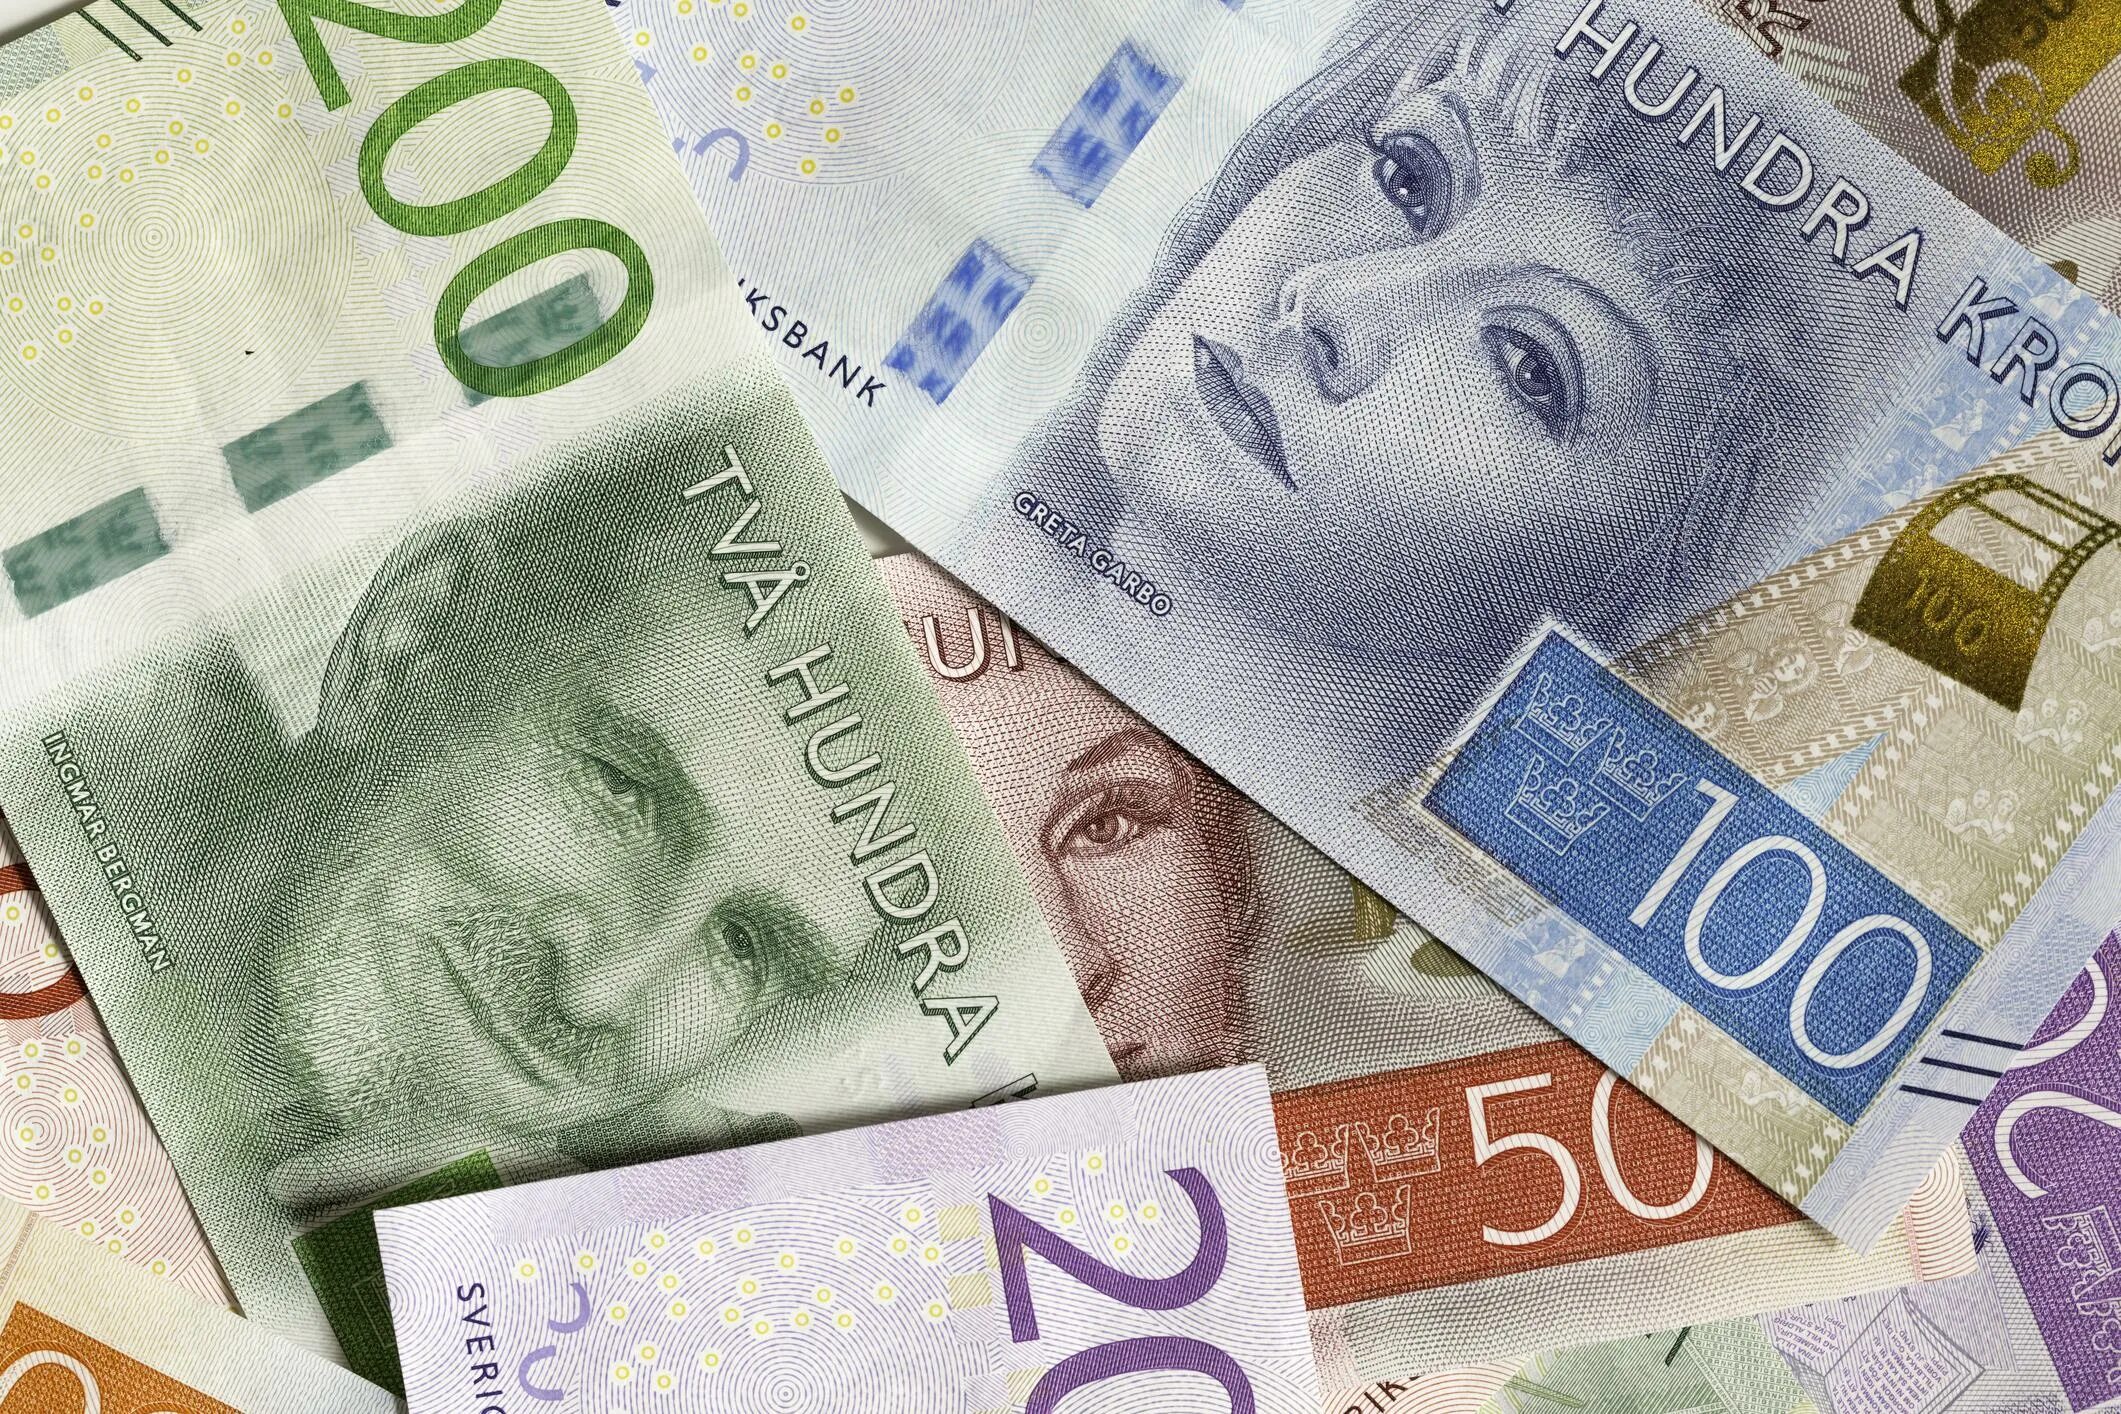 Шведская денежная единица. Шведская валюта. Крона валюта Швеции. Денежная единица Швеции. Шведские кроны 500.